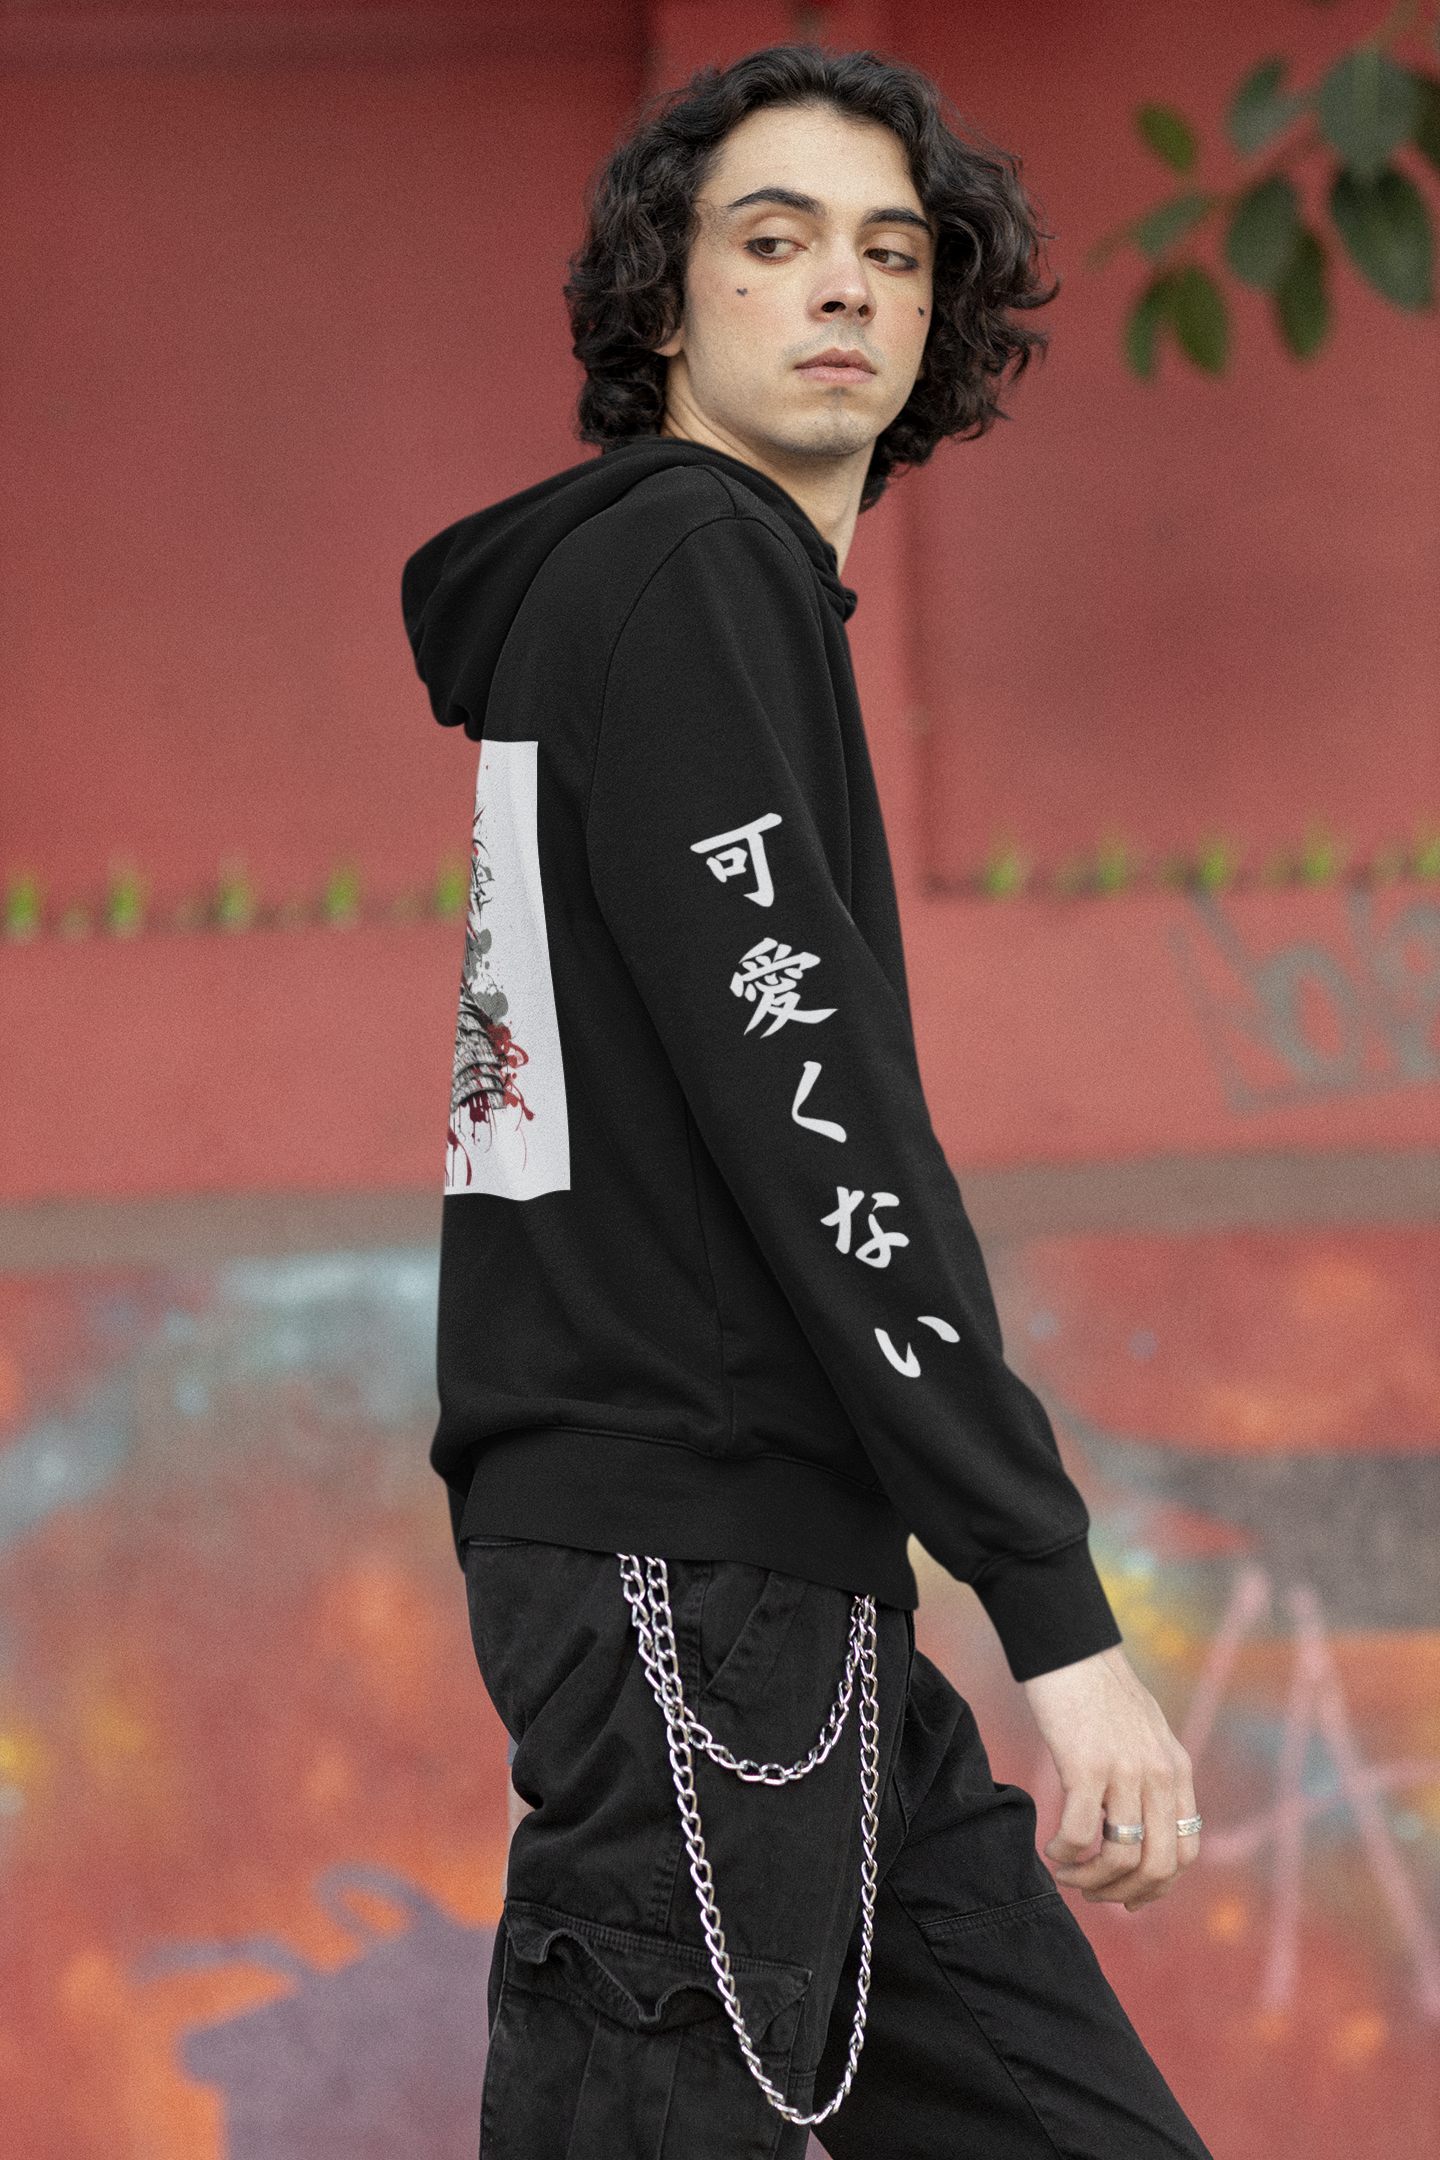 Model posing from the side in Kawaikunai black samurai hoodie with the Japanese writing of Kawaikuani in white down the sleeve